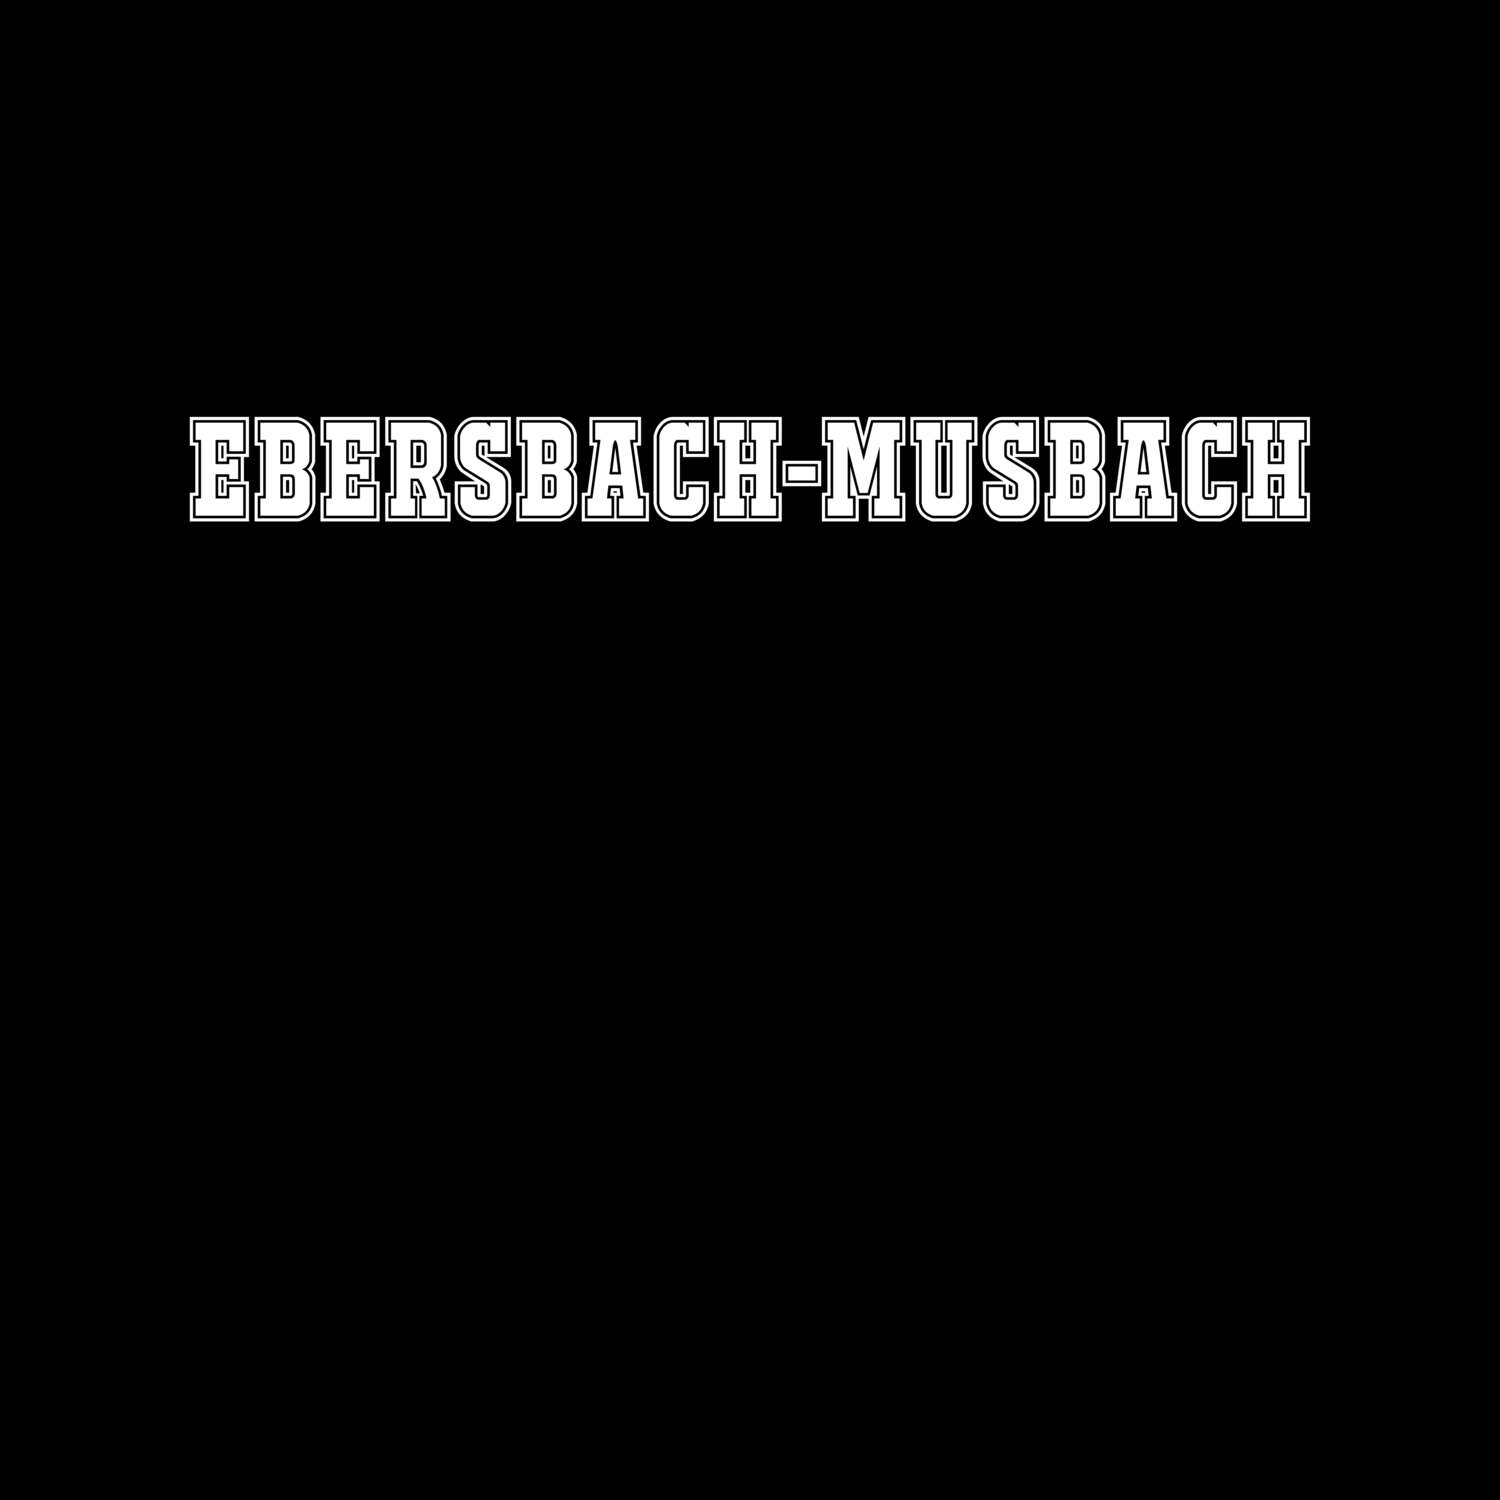 Ebersbach-Musbach T-Shirt »Classic«